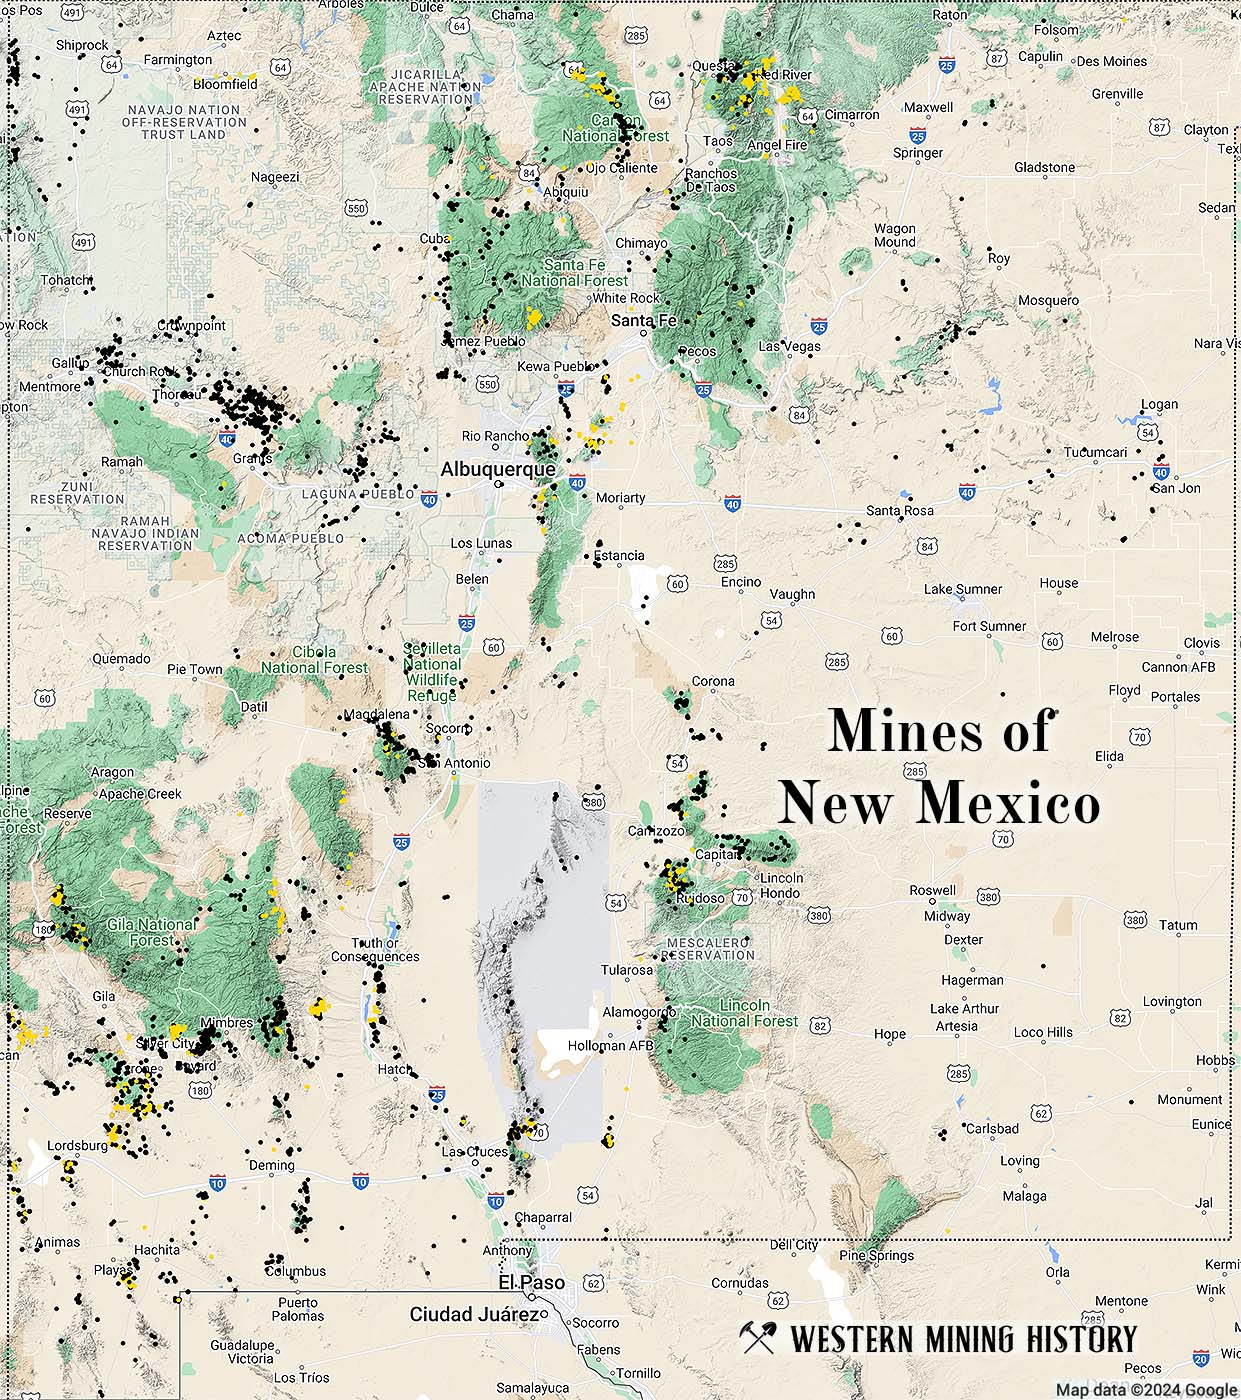 New Mexico mines